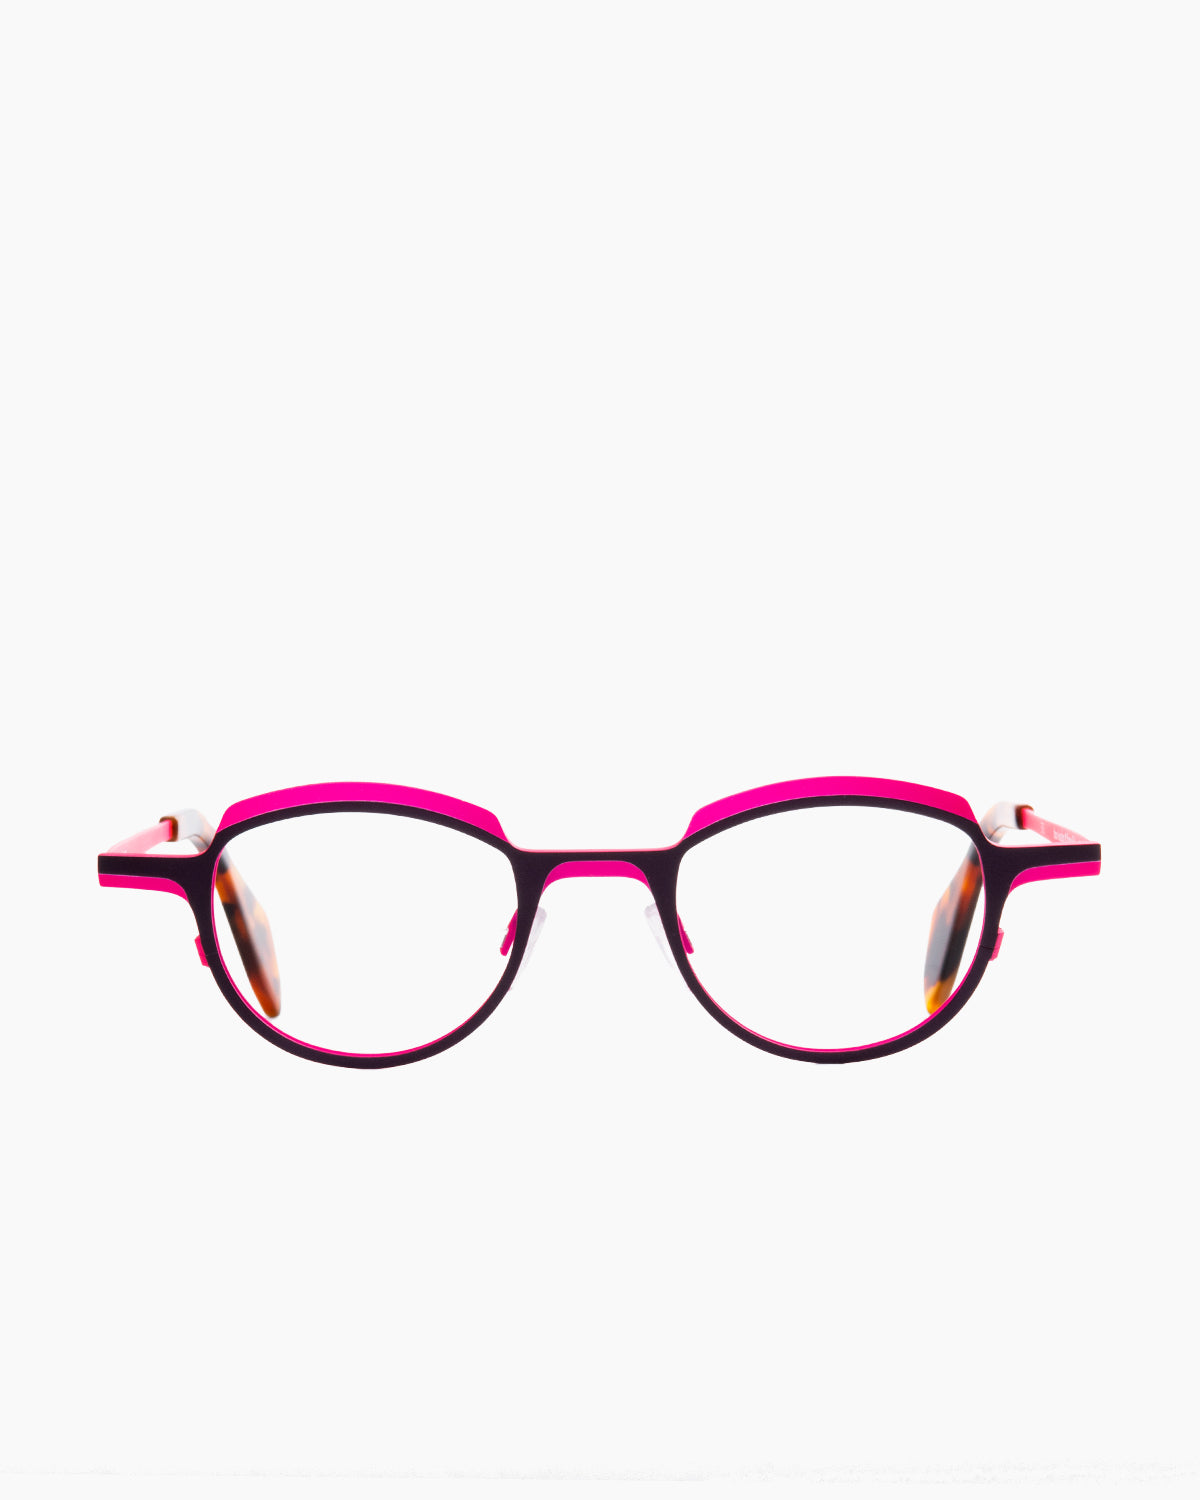 Theo - asscher - 375 | Bar à lunettes:  Marie-Sophie Dion